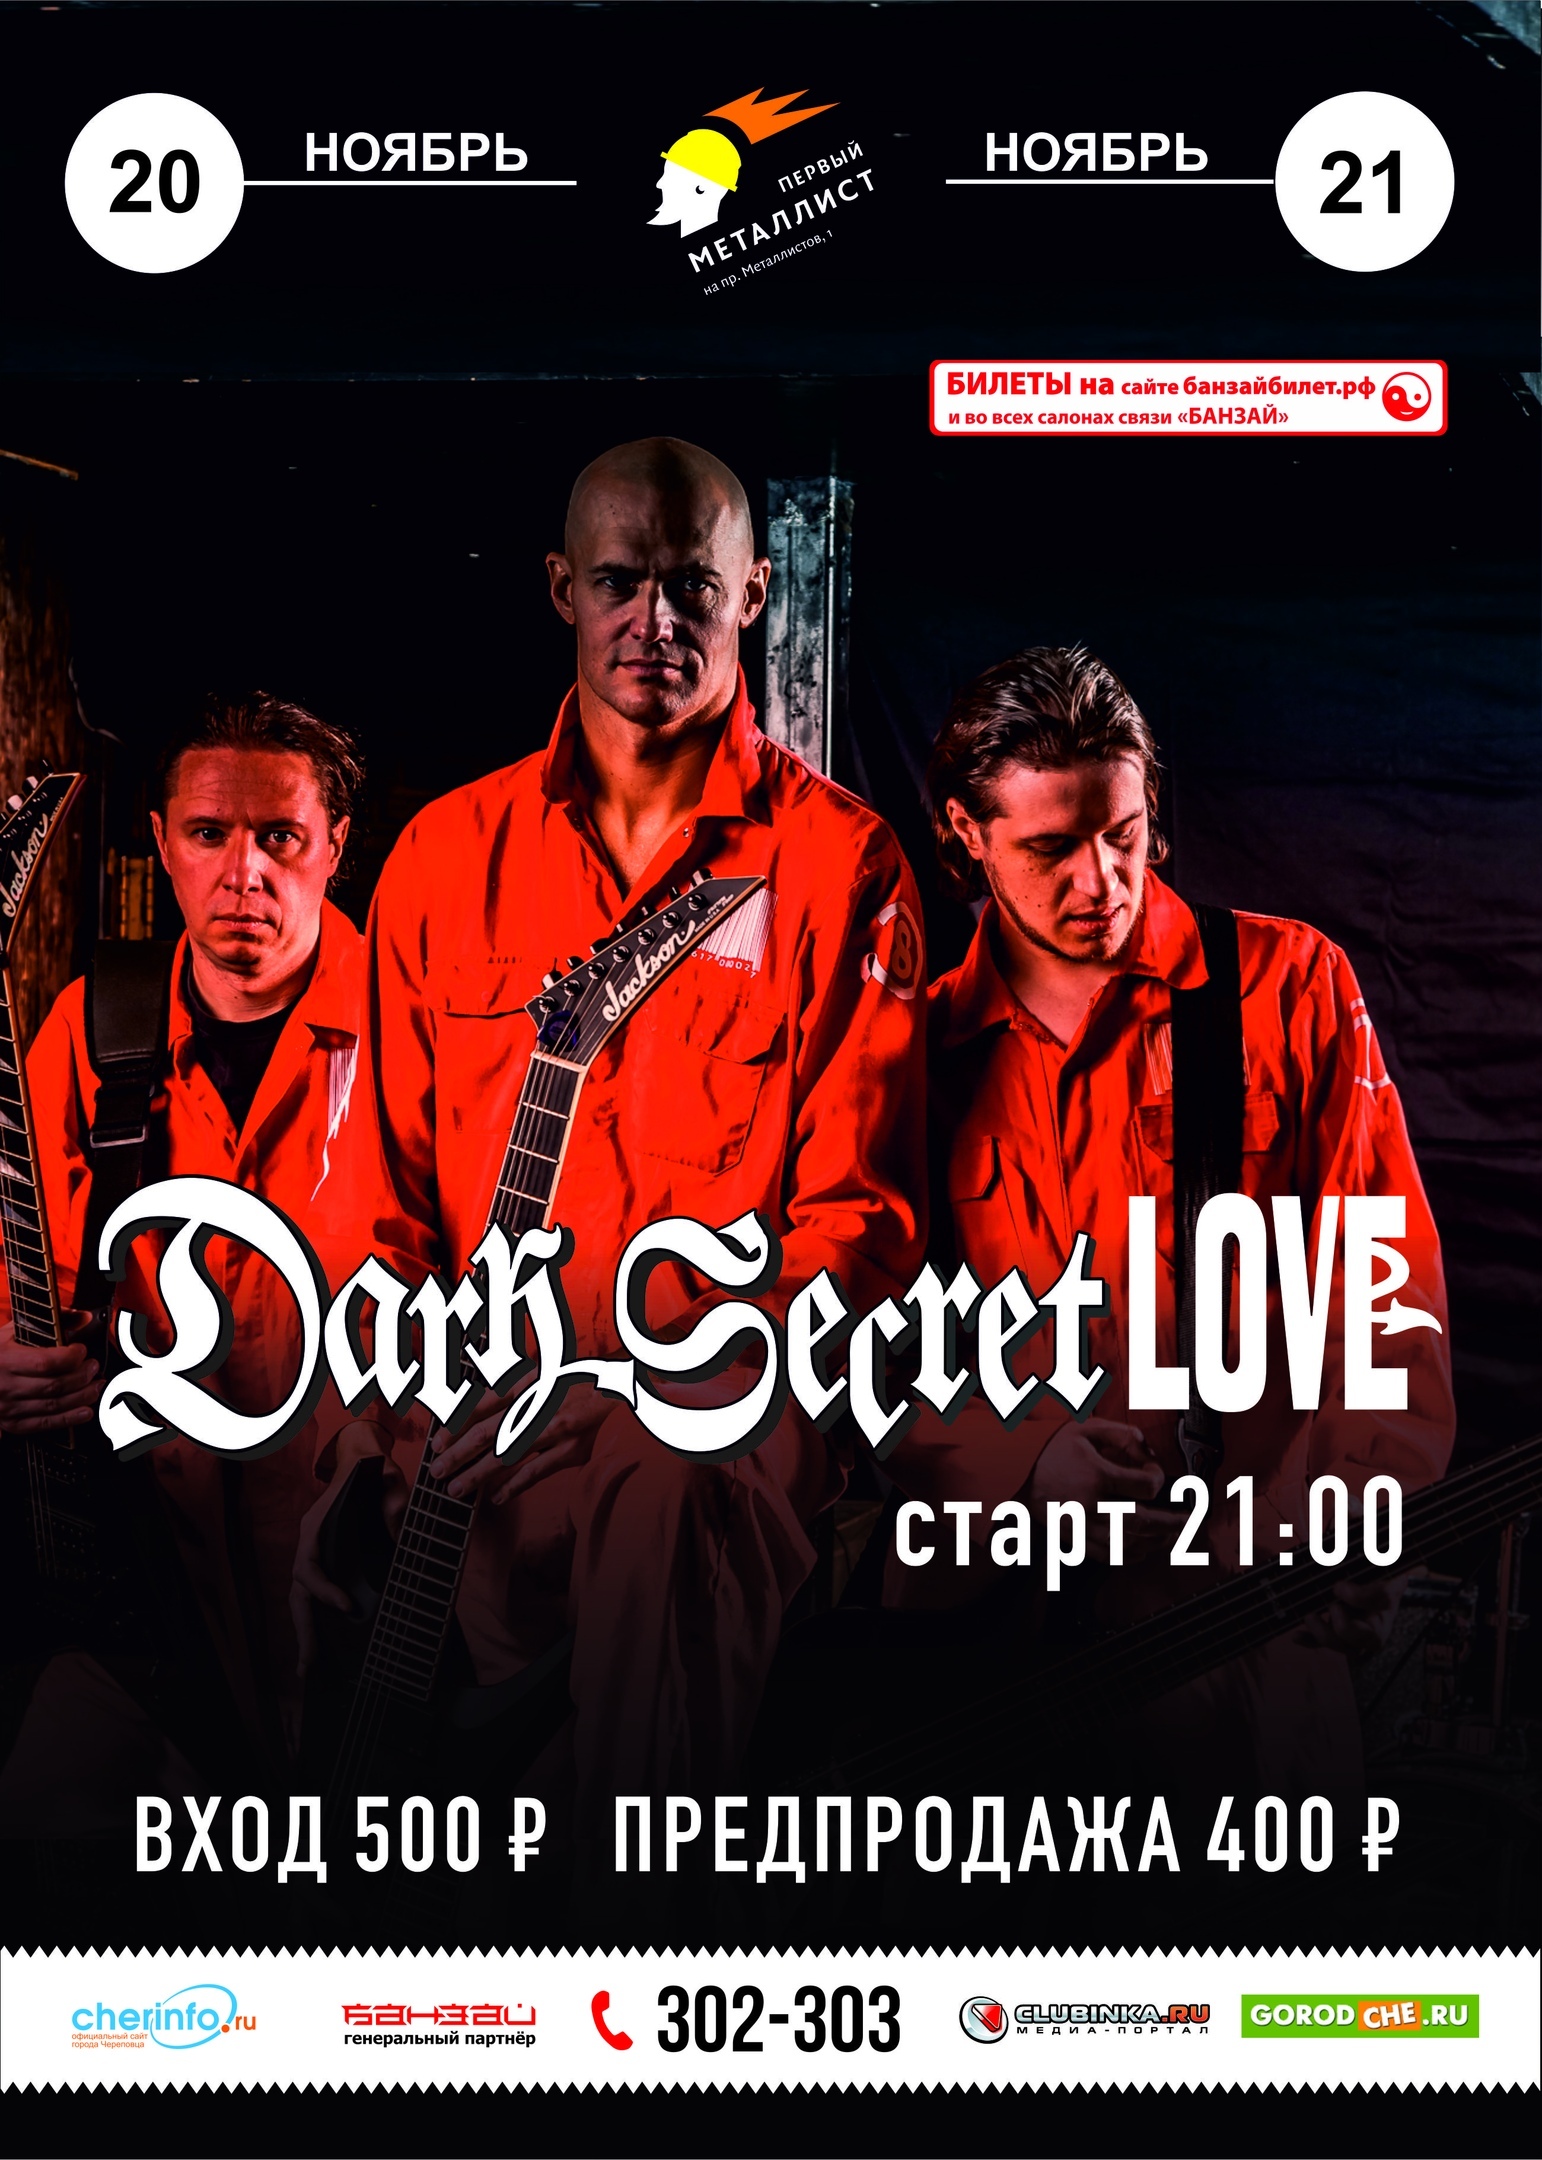 Dark Secret Love Череповец 21.11.2020